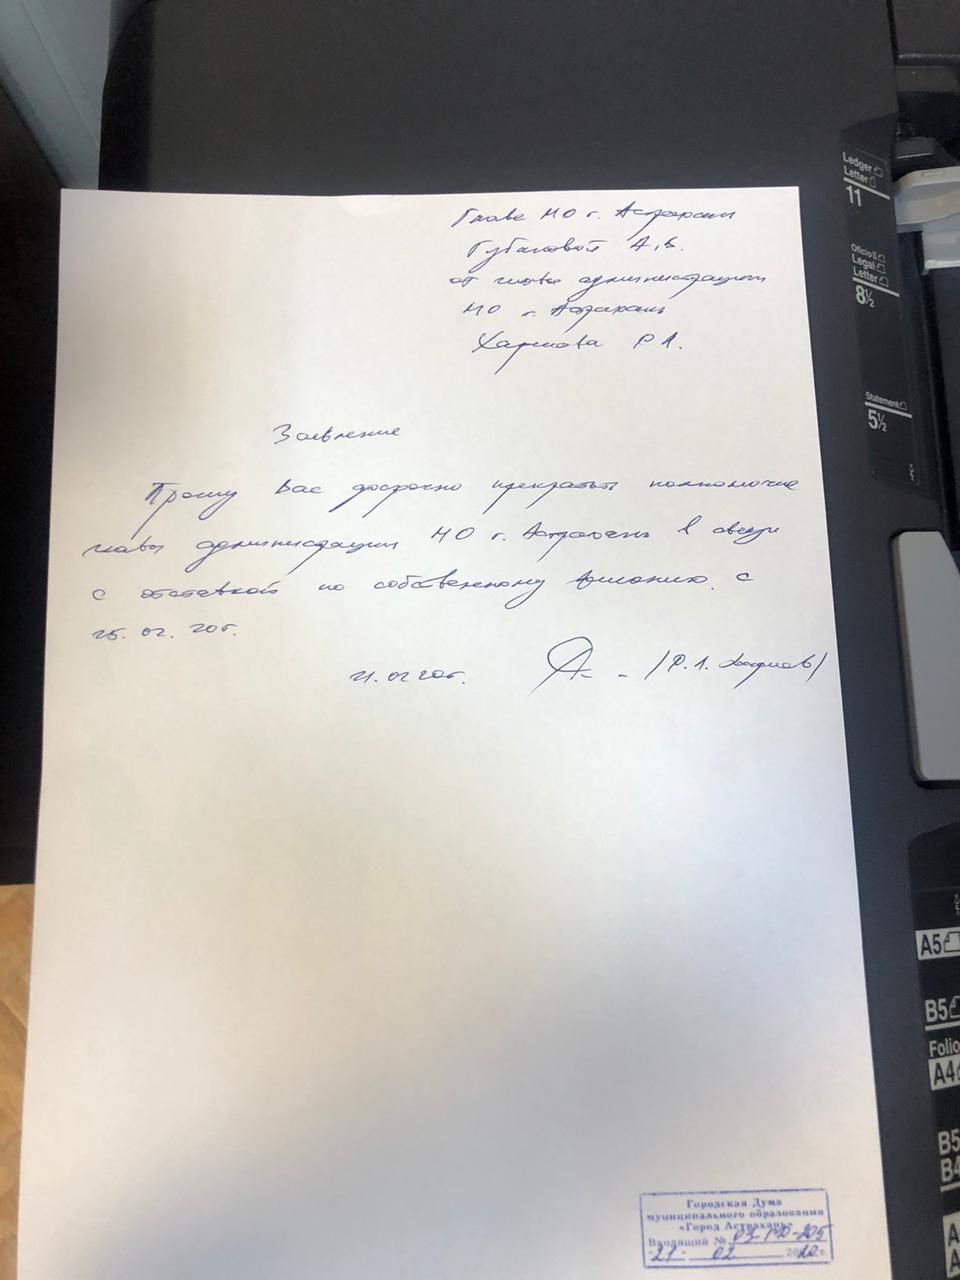 WhatsApp Image 2020 02 21 at 13.21.36 Астрахань лишилась главы администрации